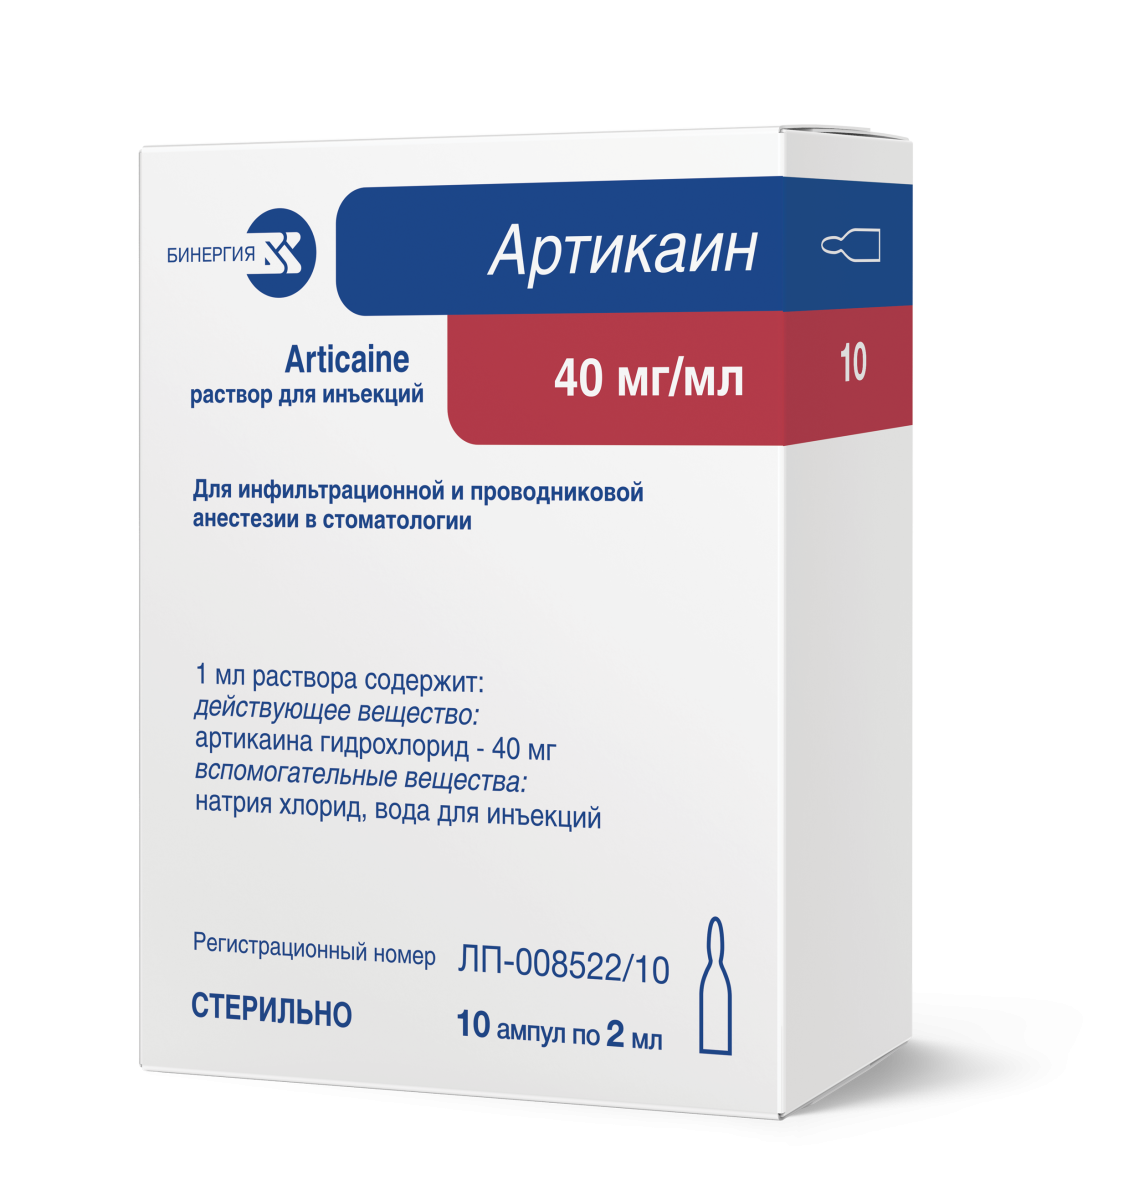 Артикаин без адреналина 40 мг/мл, №10 (ампулы 2 мл) – Анестетик маркированный, раствор для инъекций